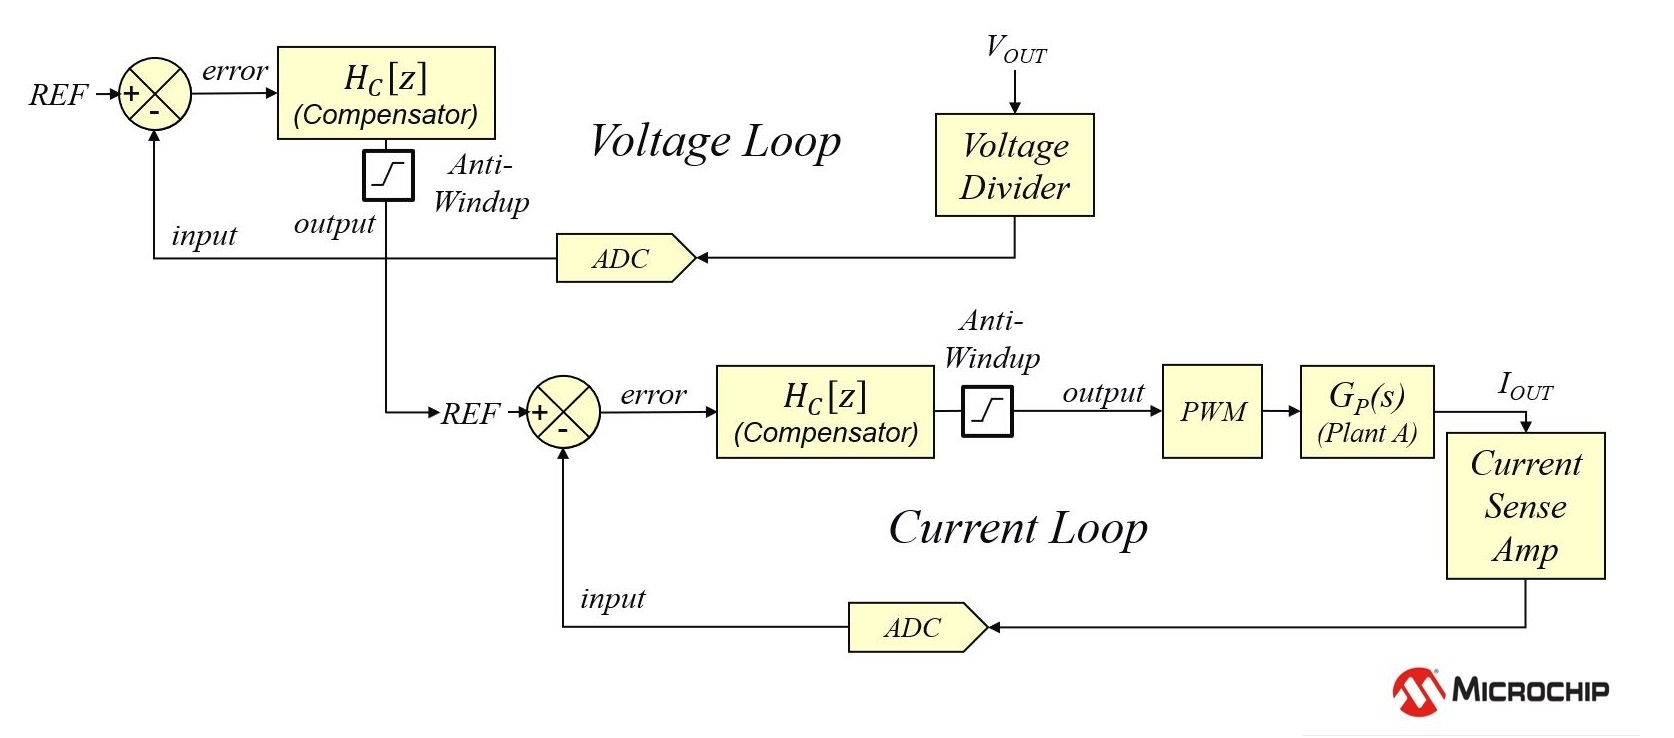 EPC9153 control loop